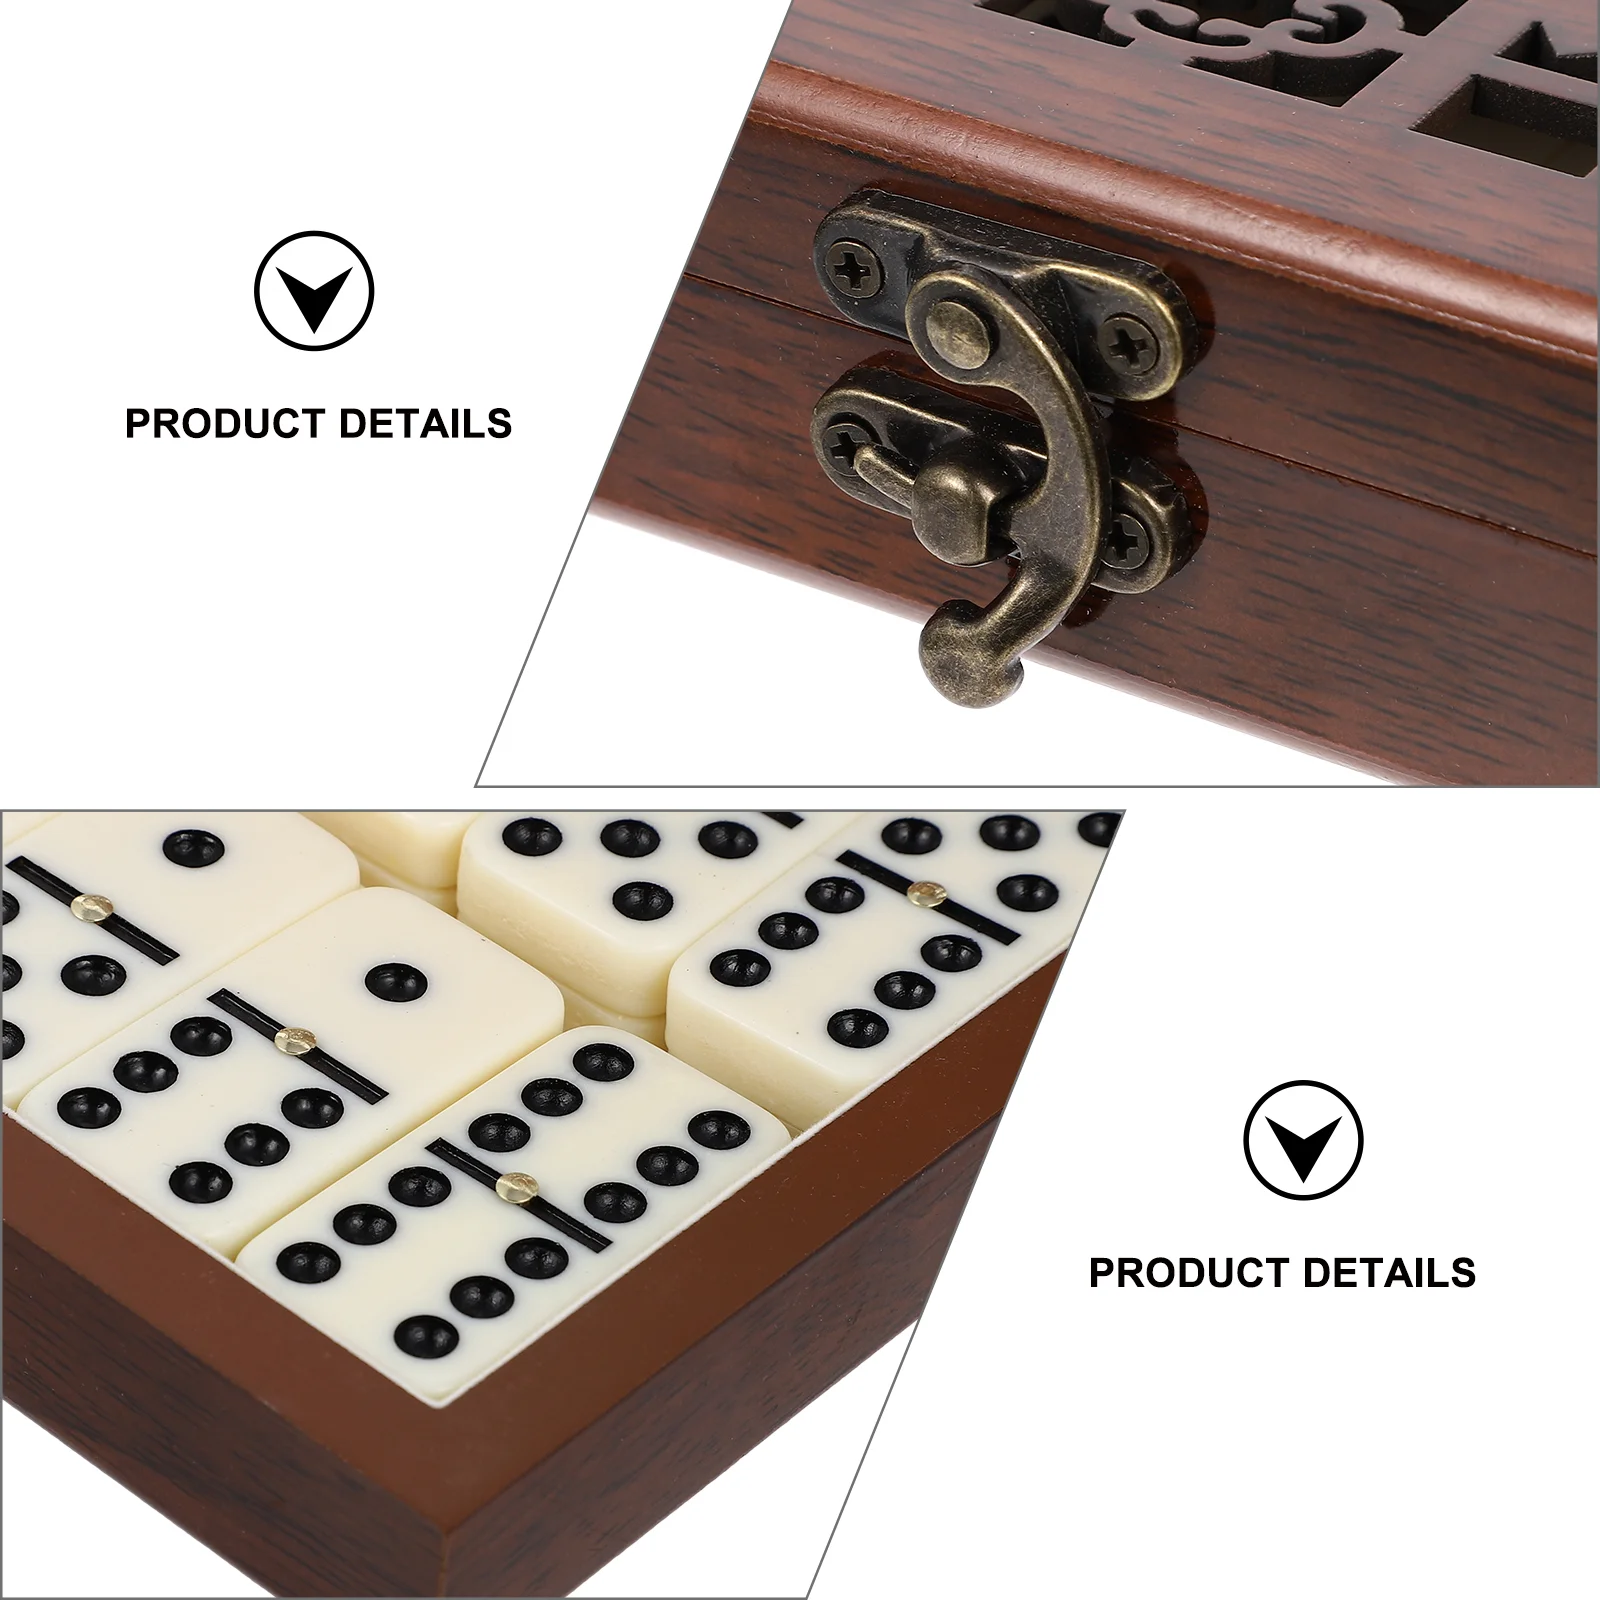 50 Pieces Wooden Dominoes Rectangular Wooden Blocks for Crafts - AliExpress